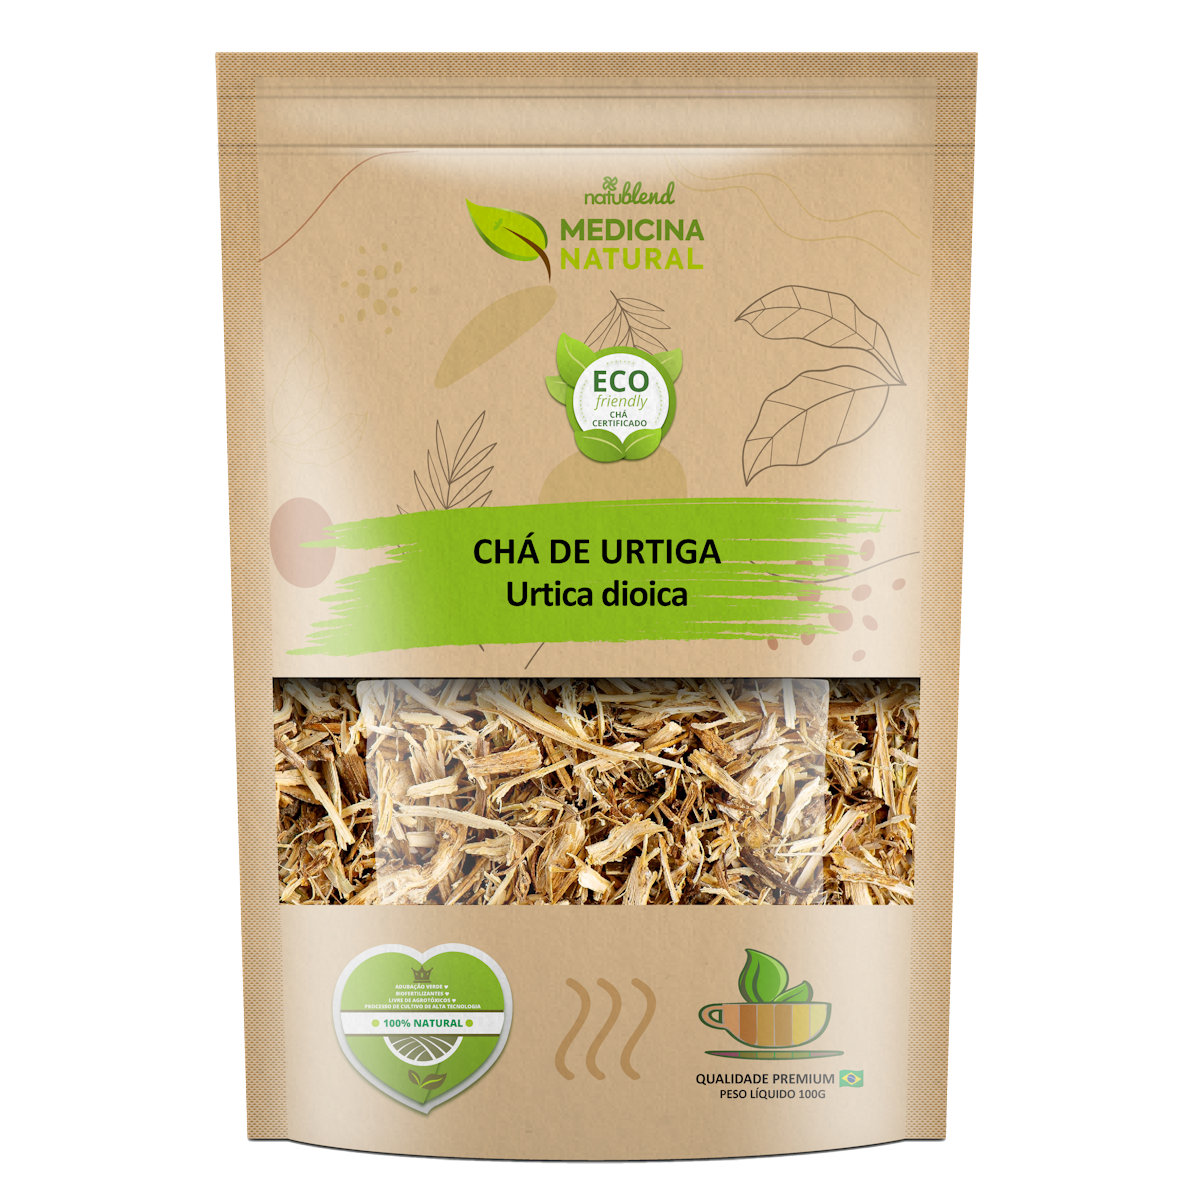 Chá de Urtiga - Urtica dioica - Medicina Natural